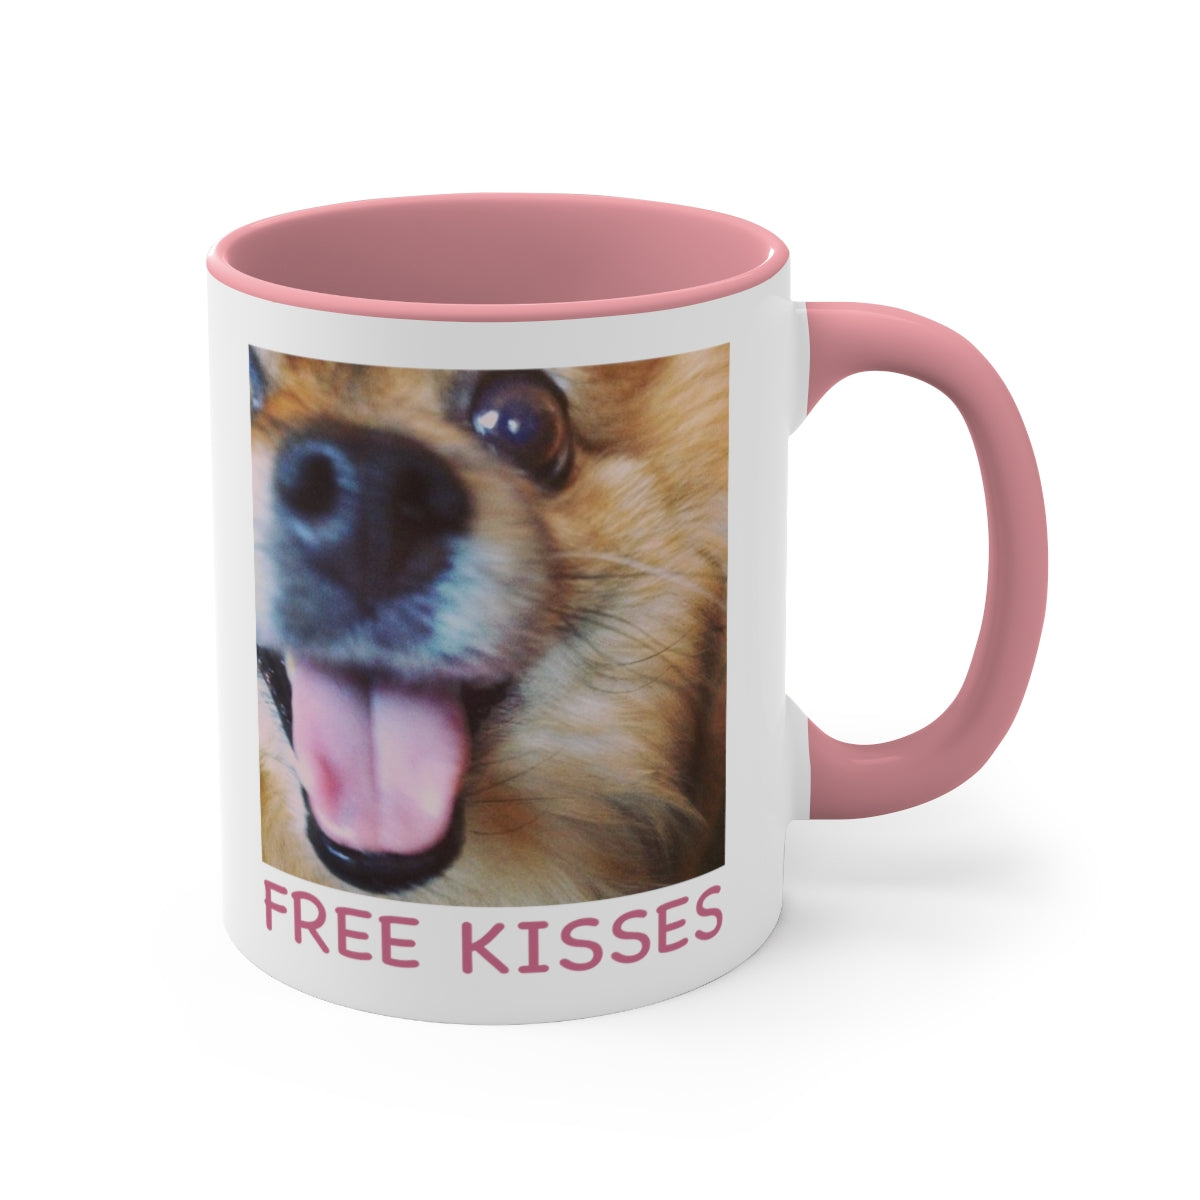 FREE KISSES. Dog Accent Coffee Mug, 11oz